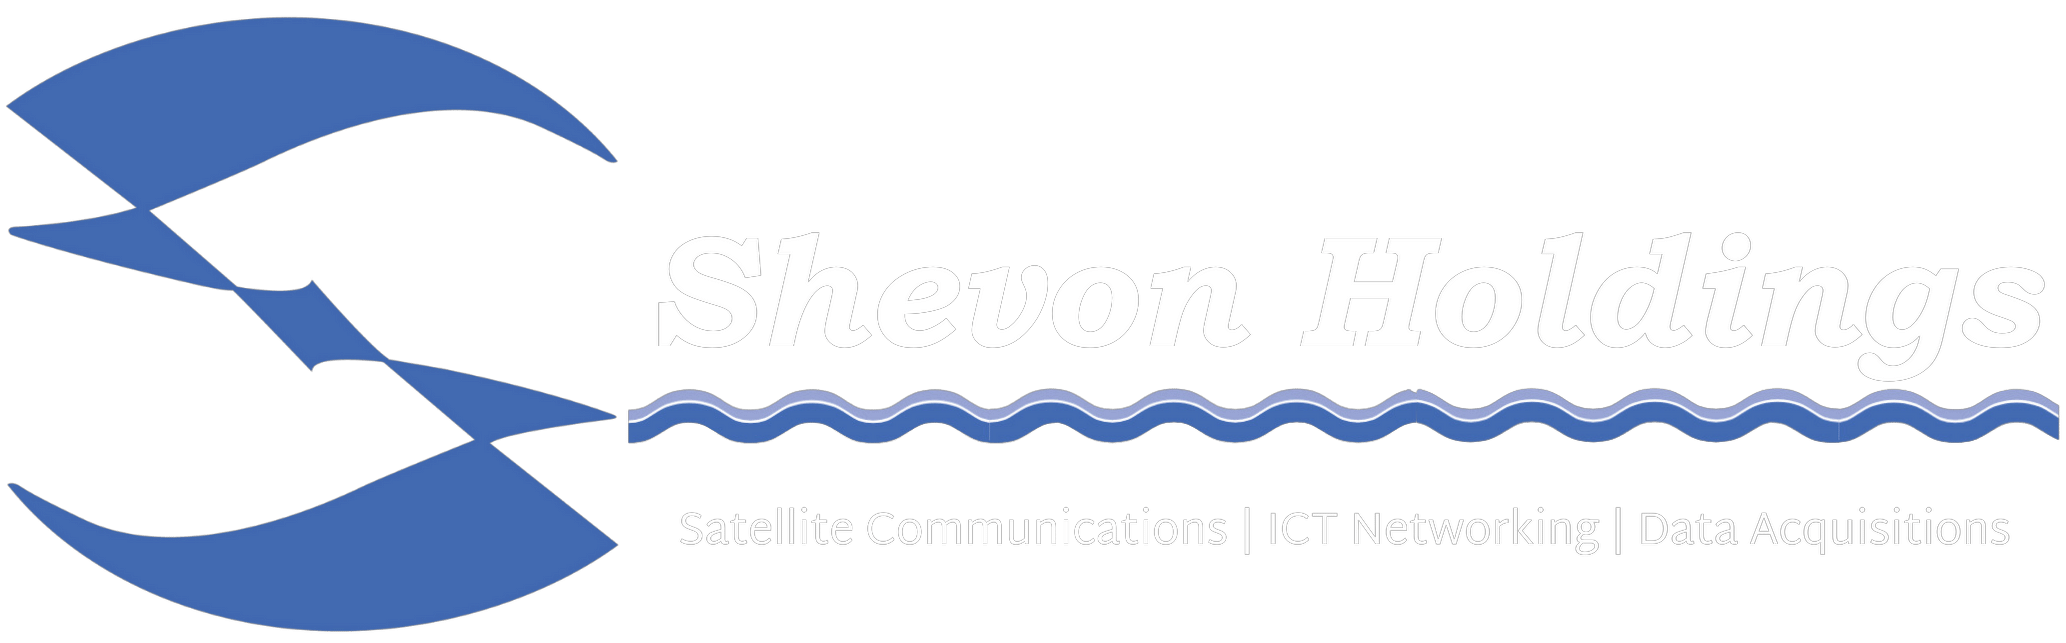 Shevon Holdings